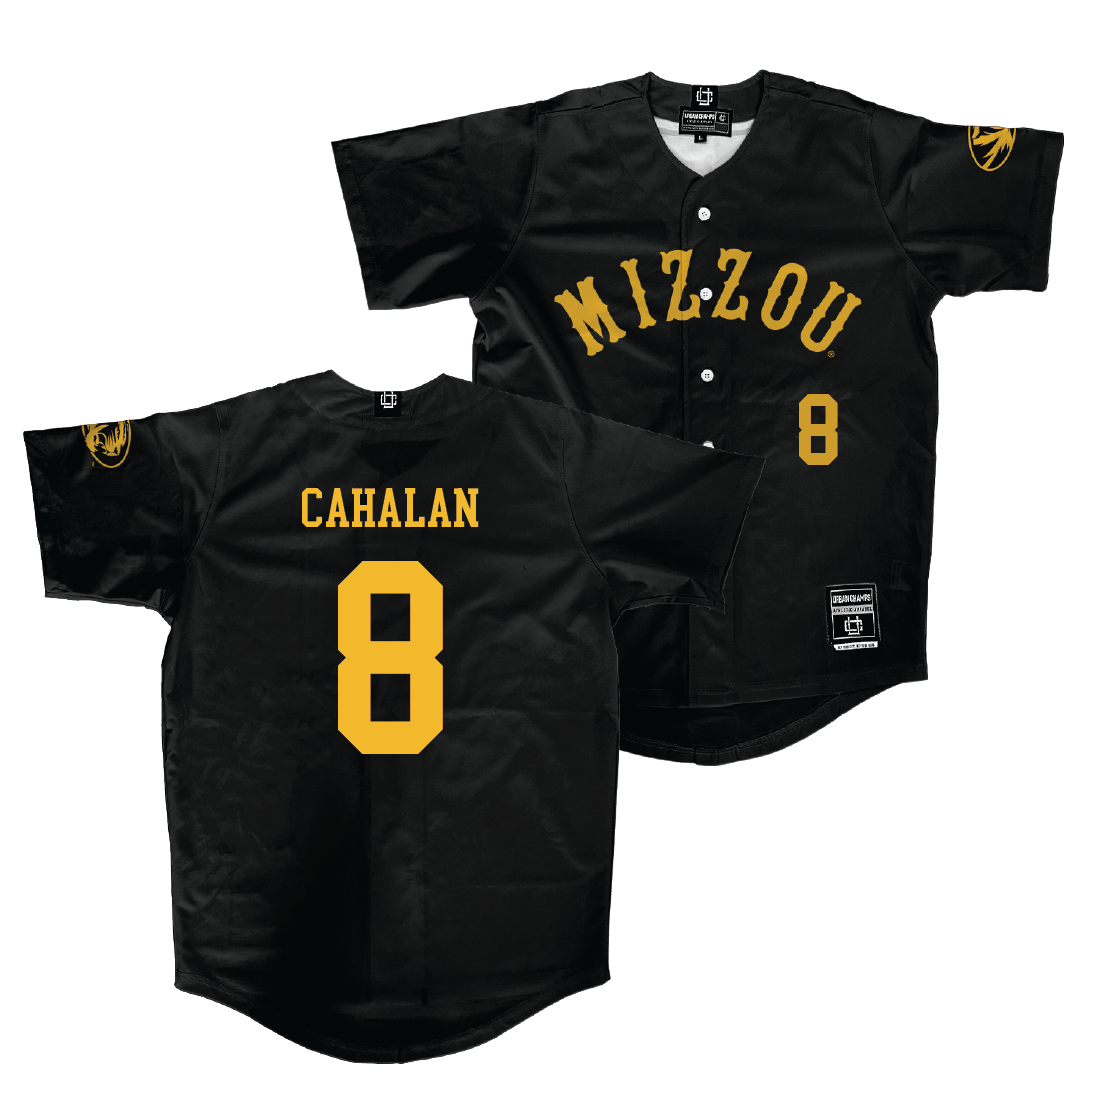 Mizzou Softball Black Jersey - Claire Cahalan | #8